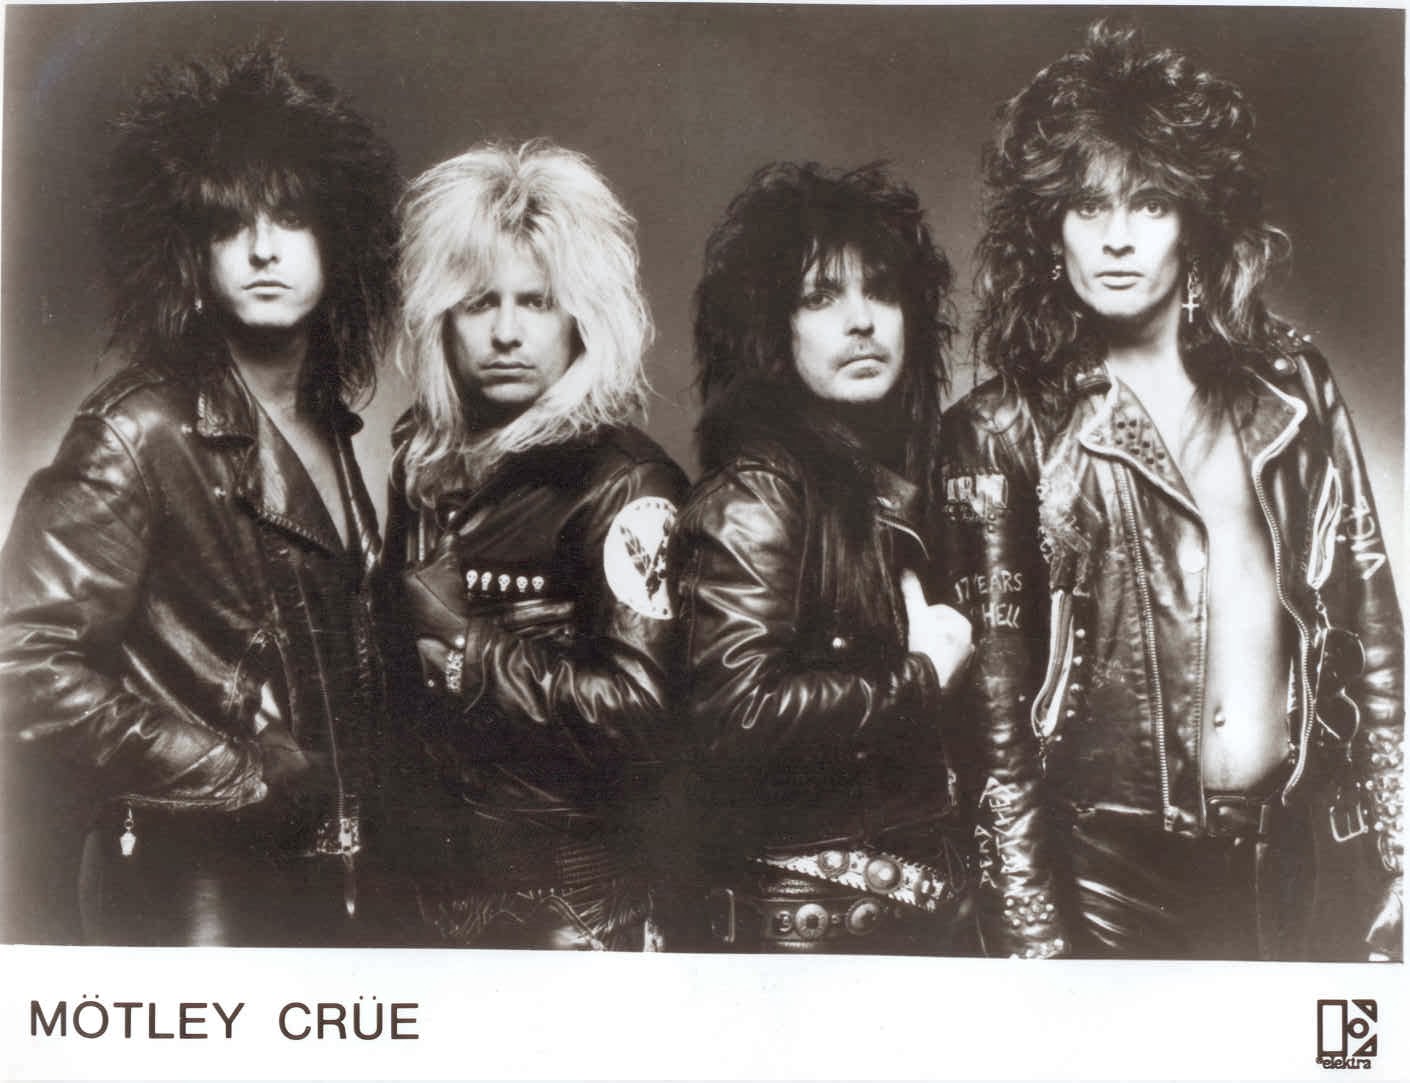 Метал групп 80. Группа Mötley Crüe. Мотли Крю в 80-х. Motley Crue 80s. Мотли Крю молодые.